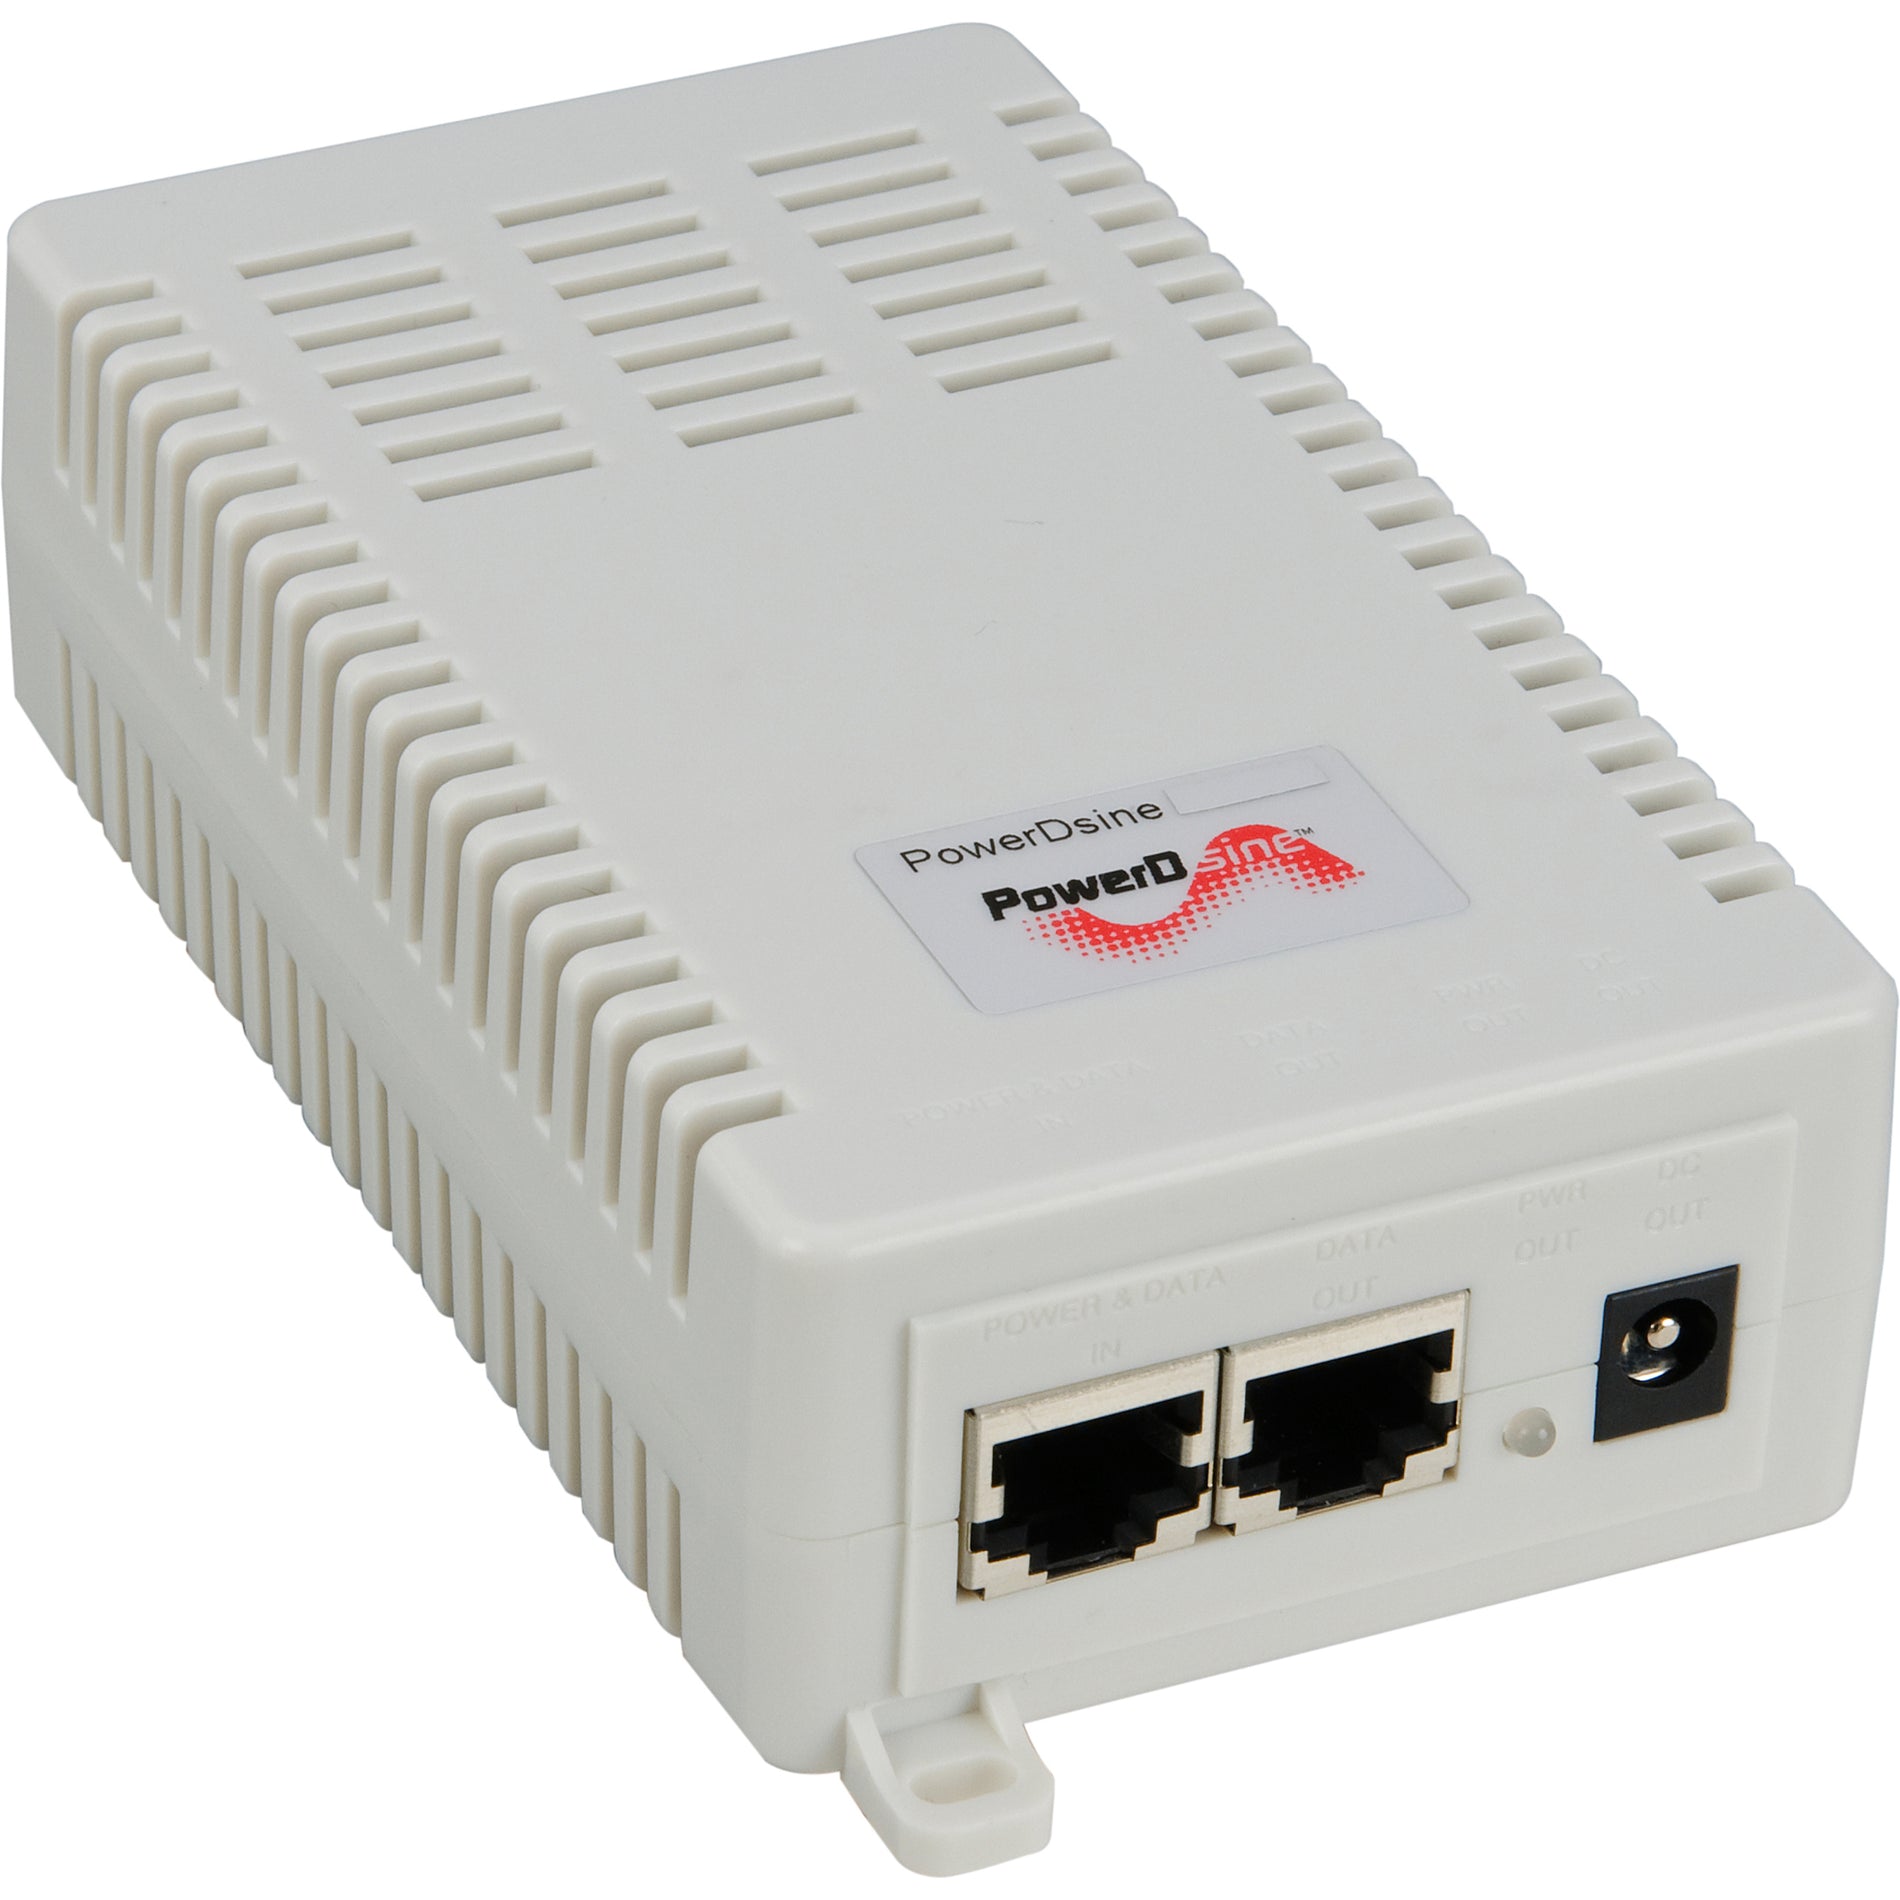 Microchip PD-AS-951/12-24 HiPoE 951 Power over Ethernet Splitter, 54W, 5A, 24V DC